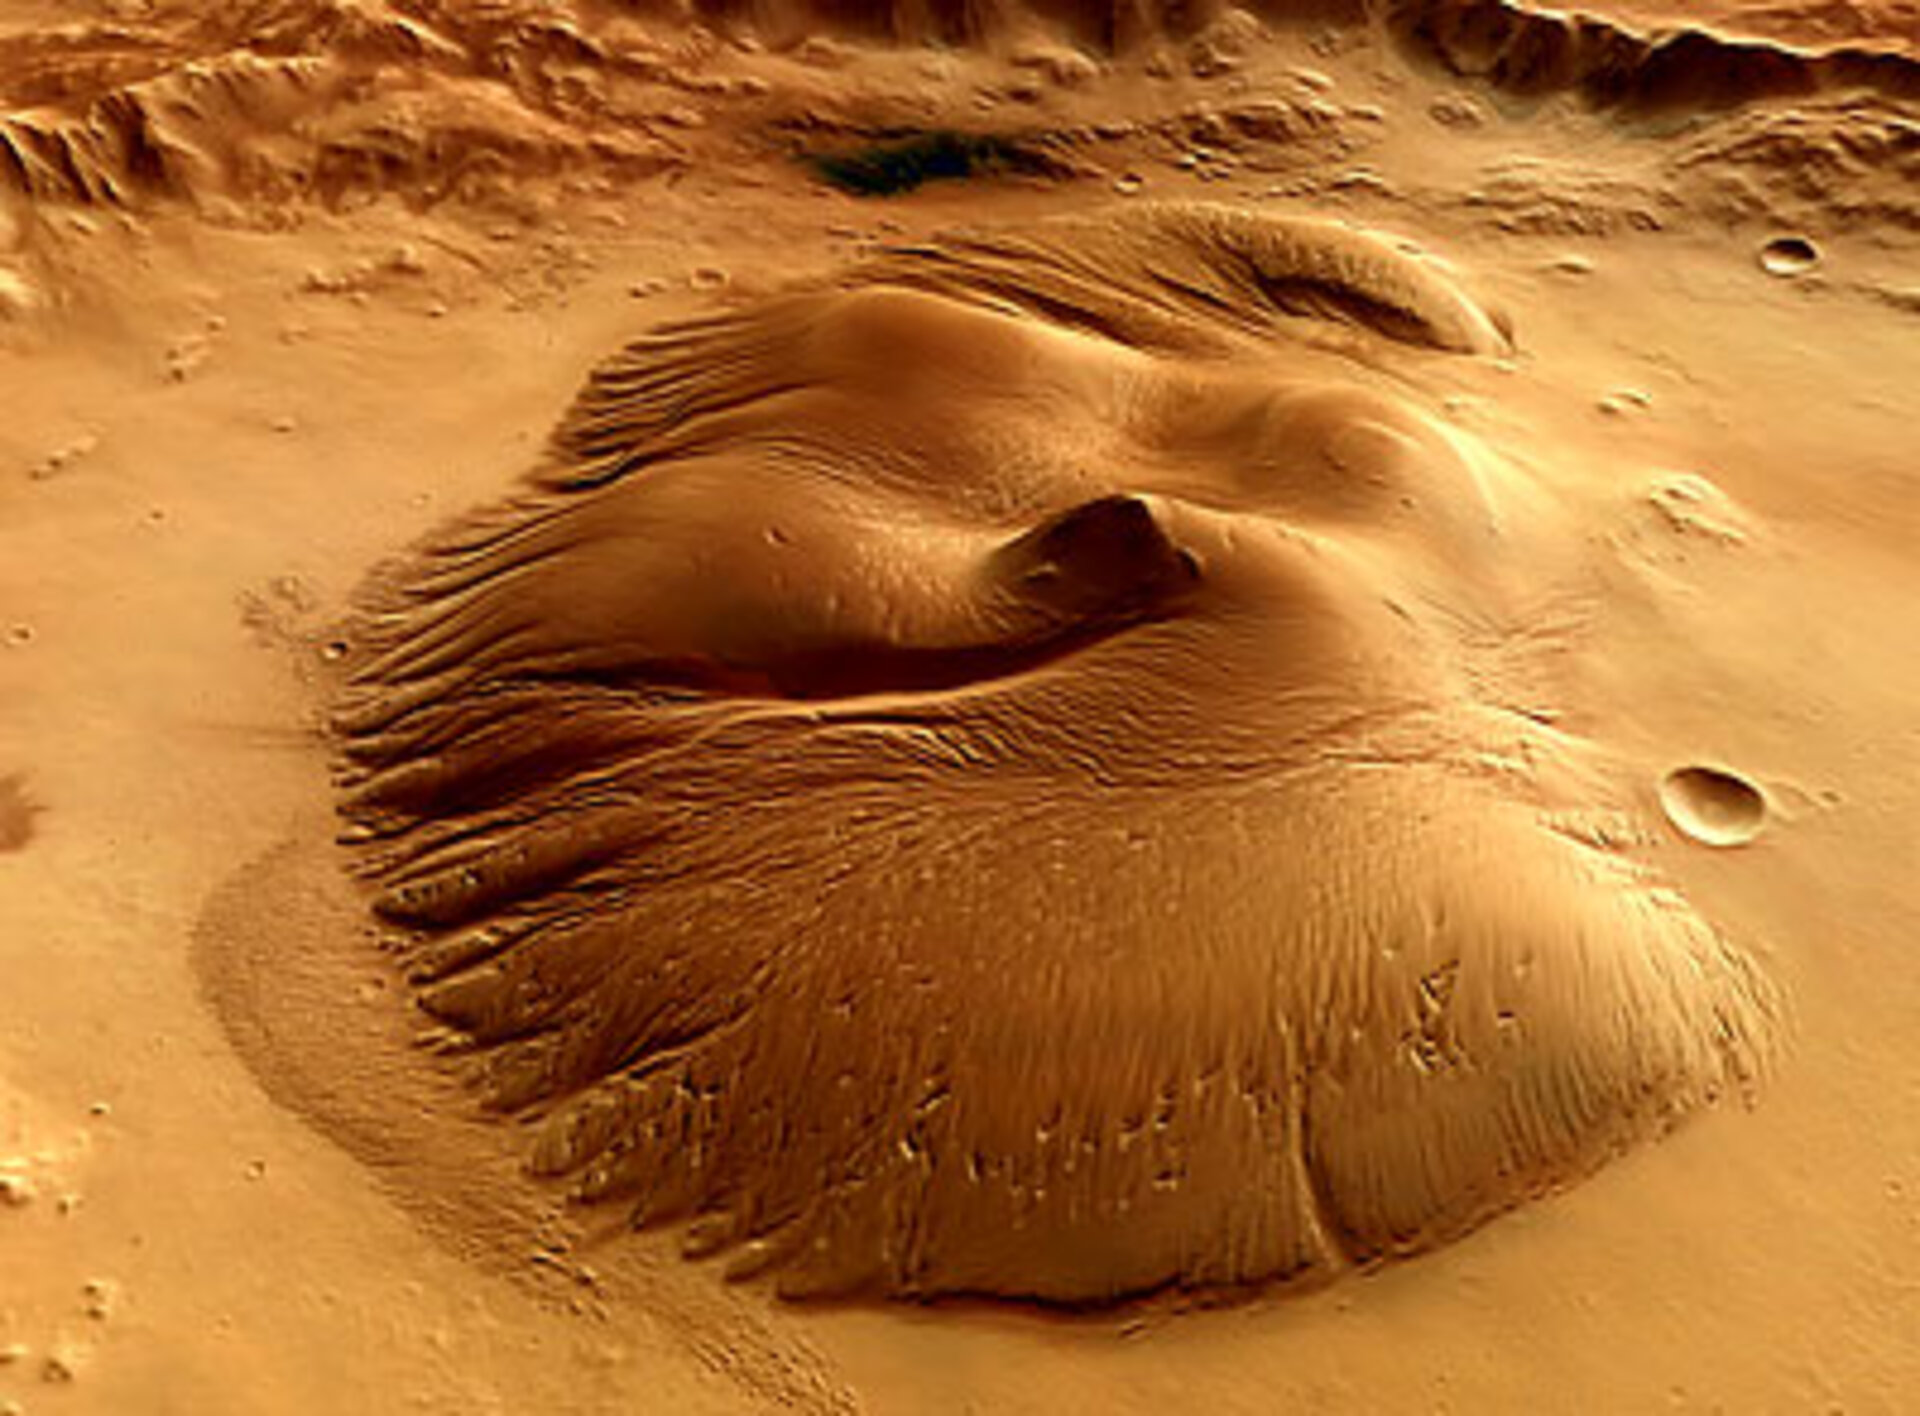 Nicholson Crater on Mars